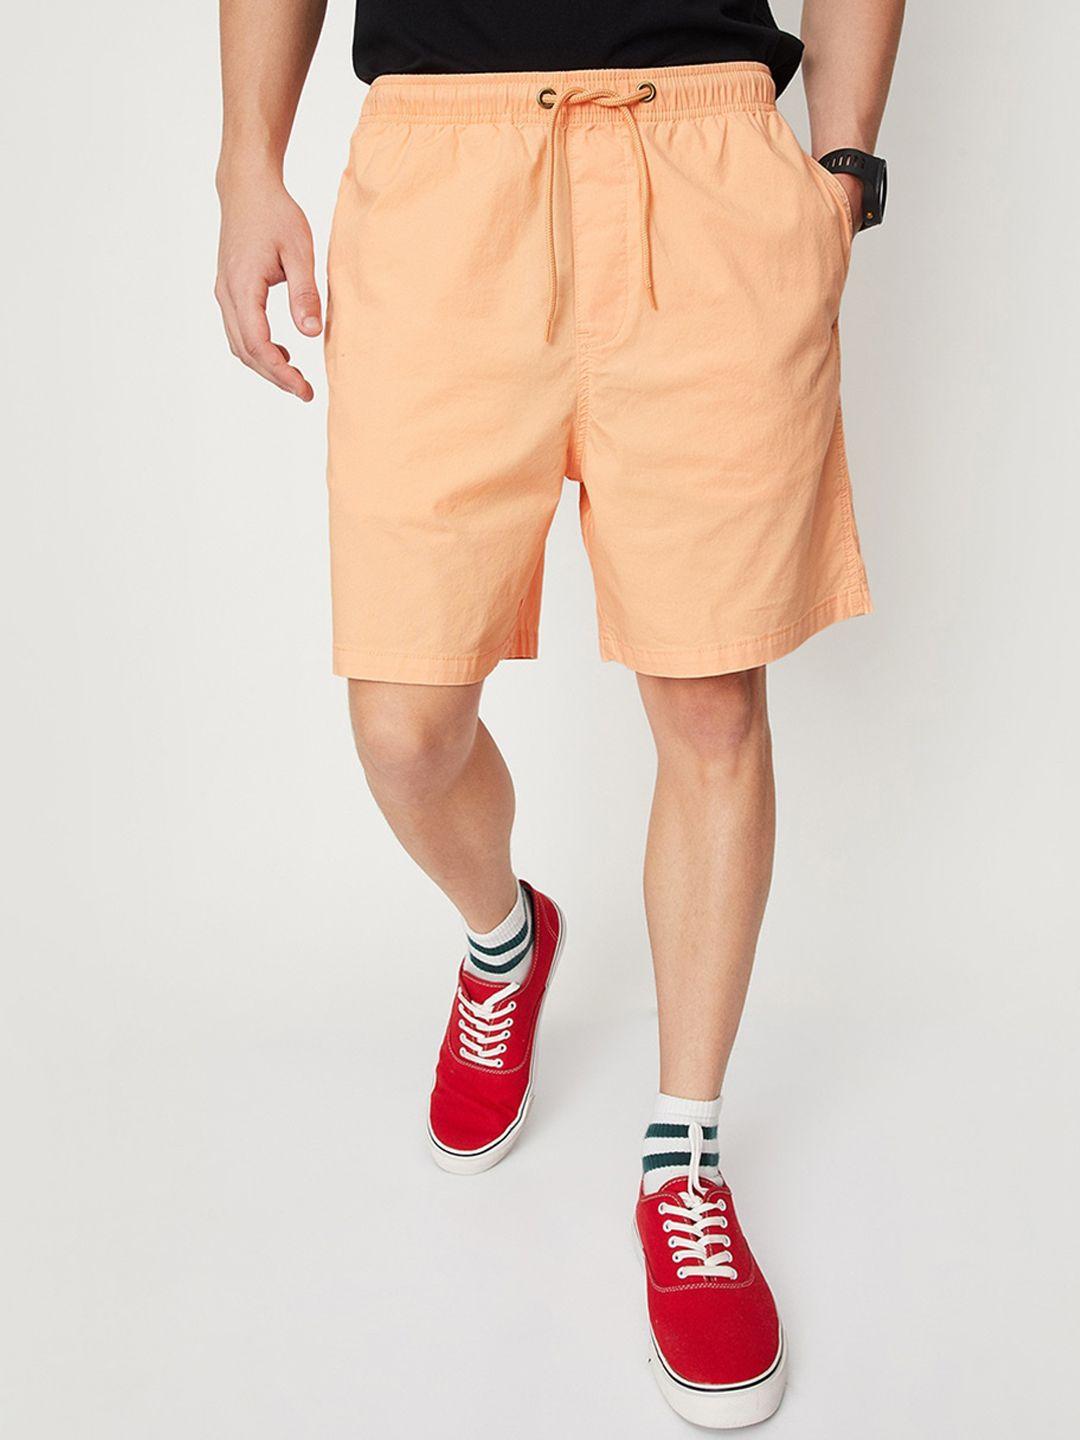 max-men-mid-rise-regular-shorts